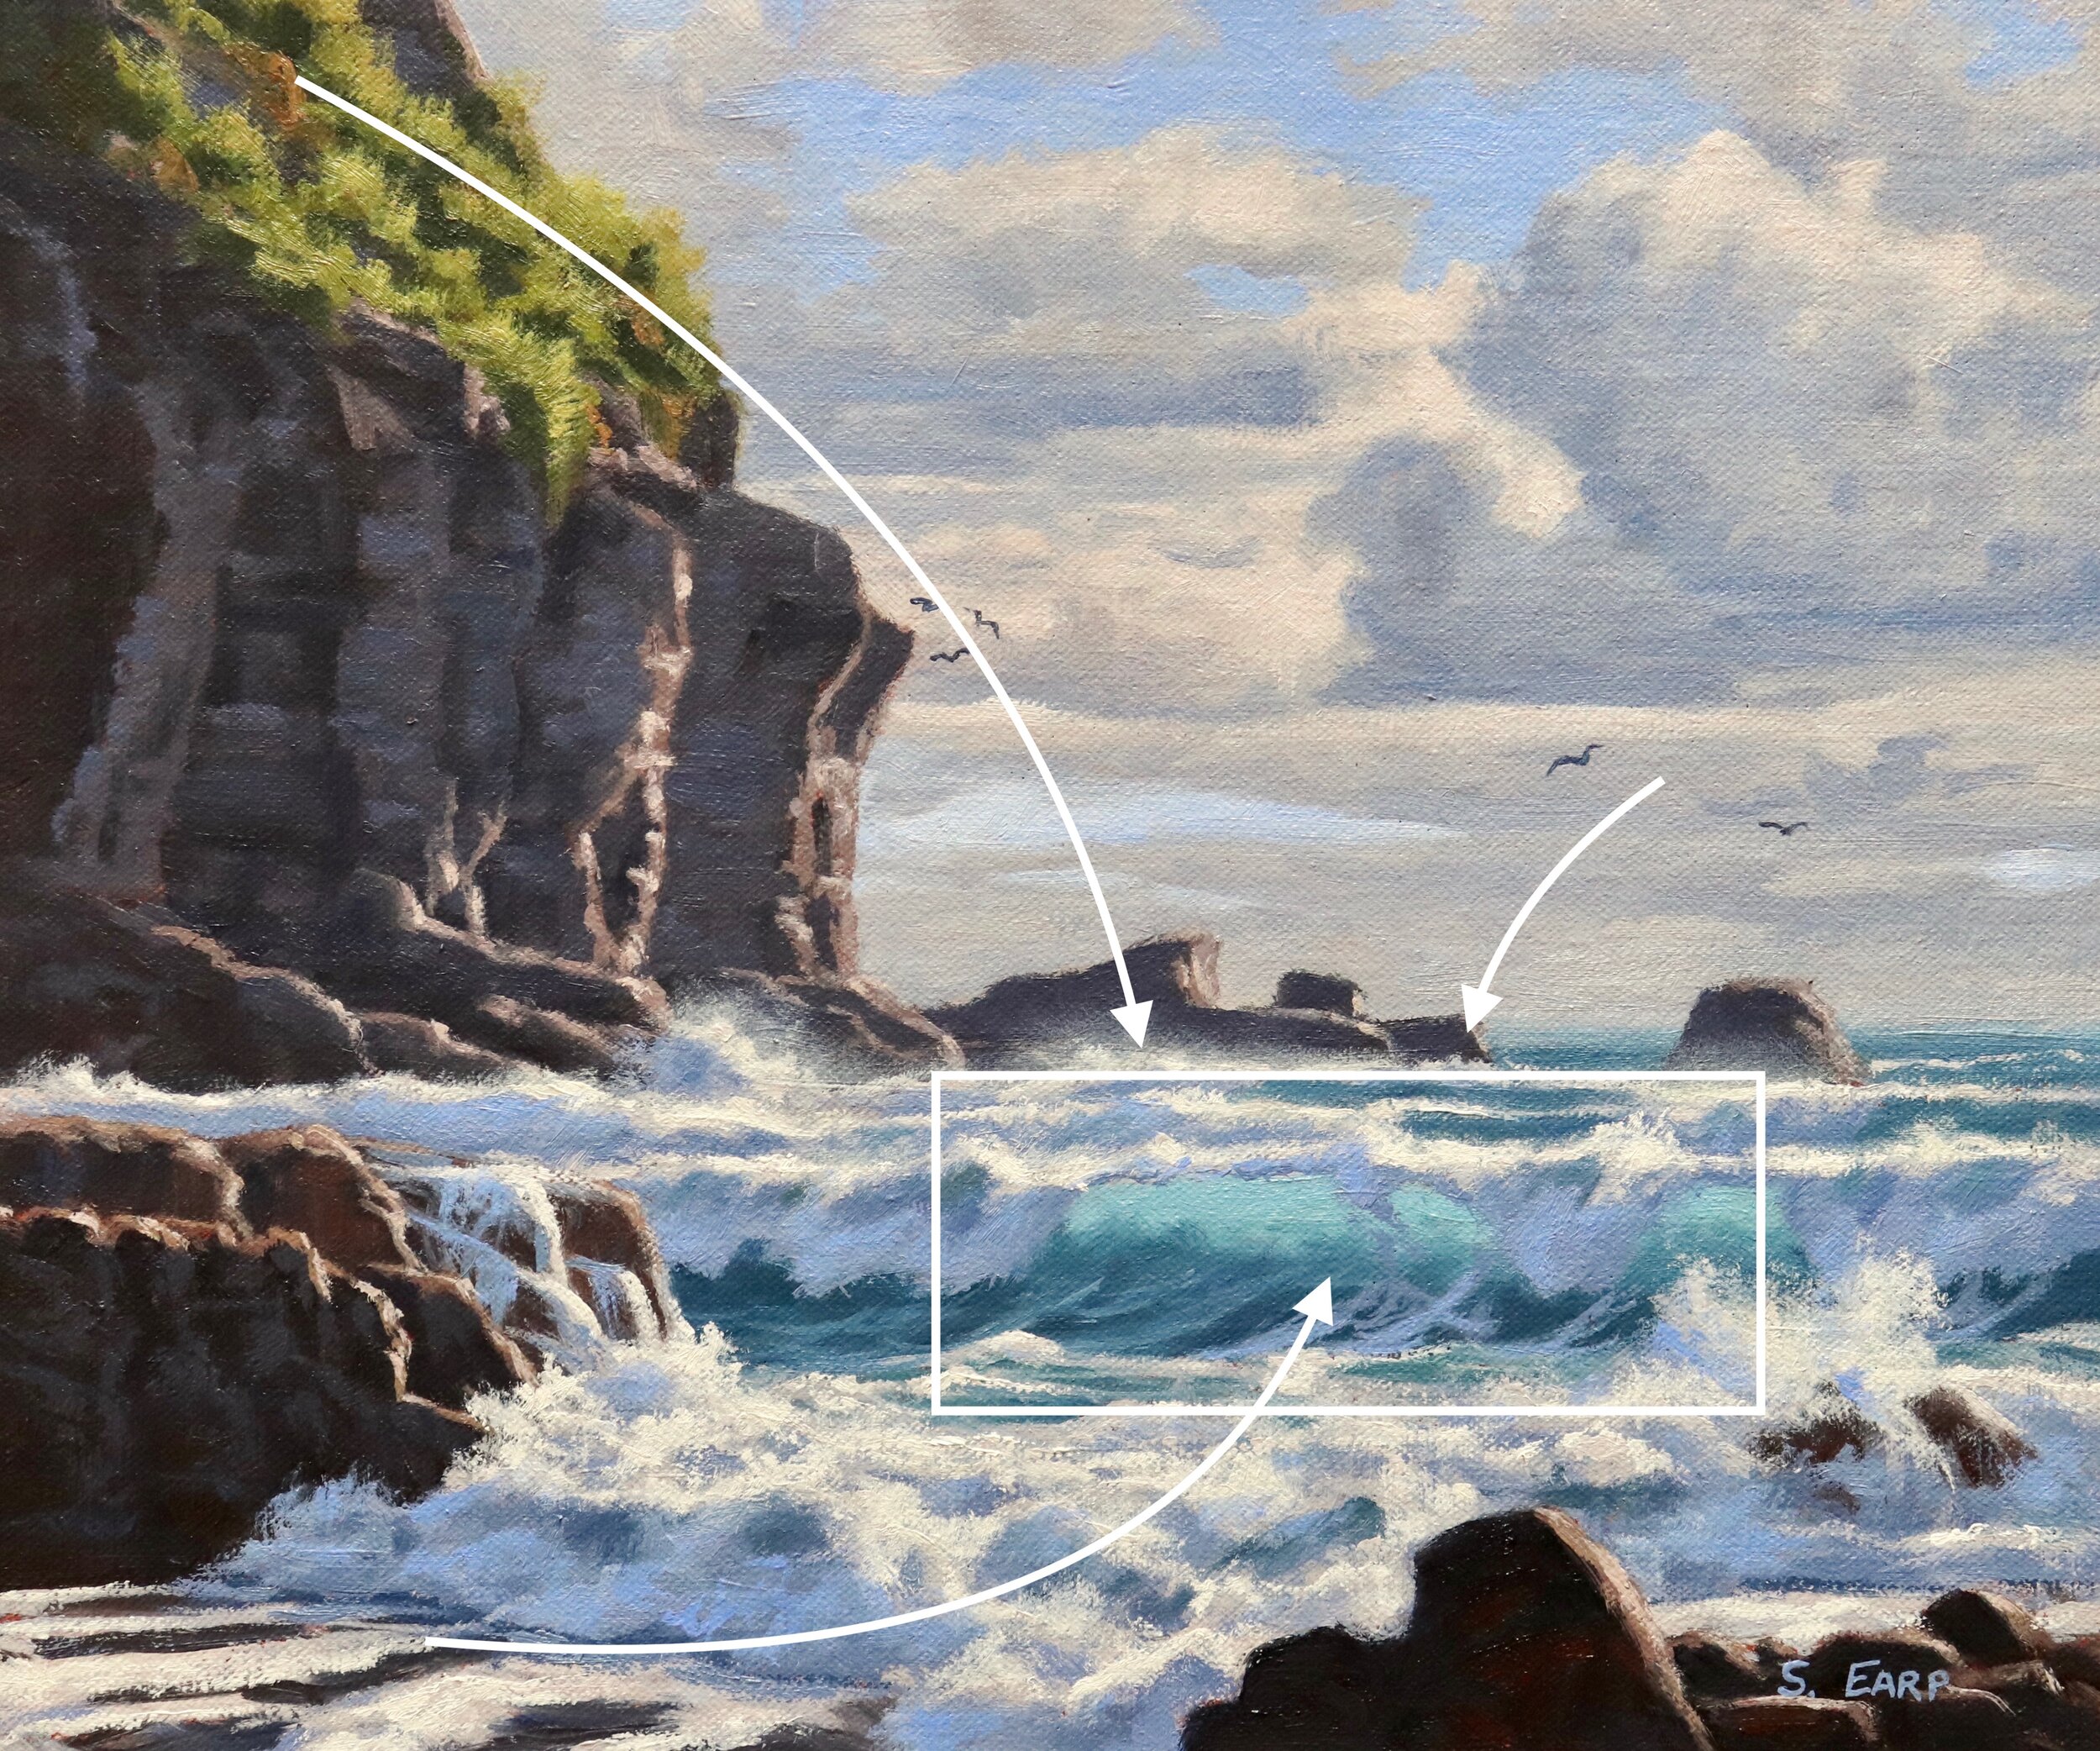 Breaking Waves - Piha - Samuel Earp - oil painting copy 4.jpeg